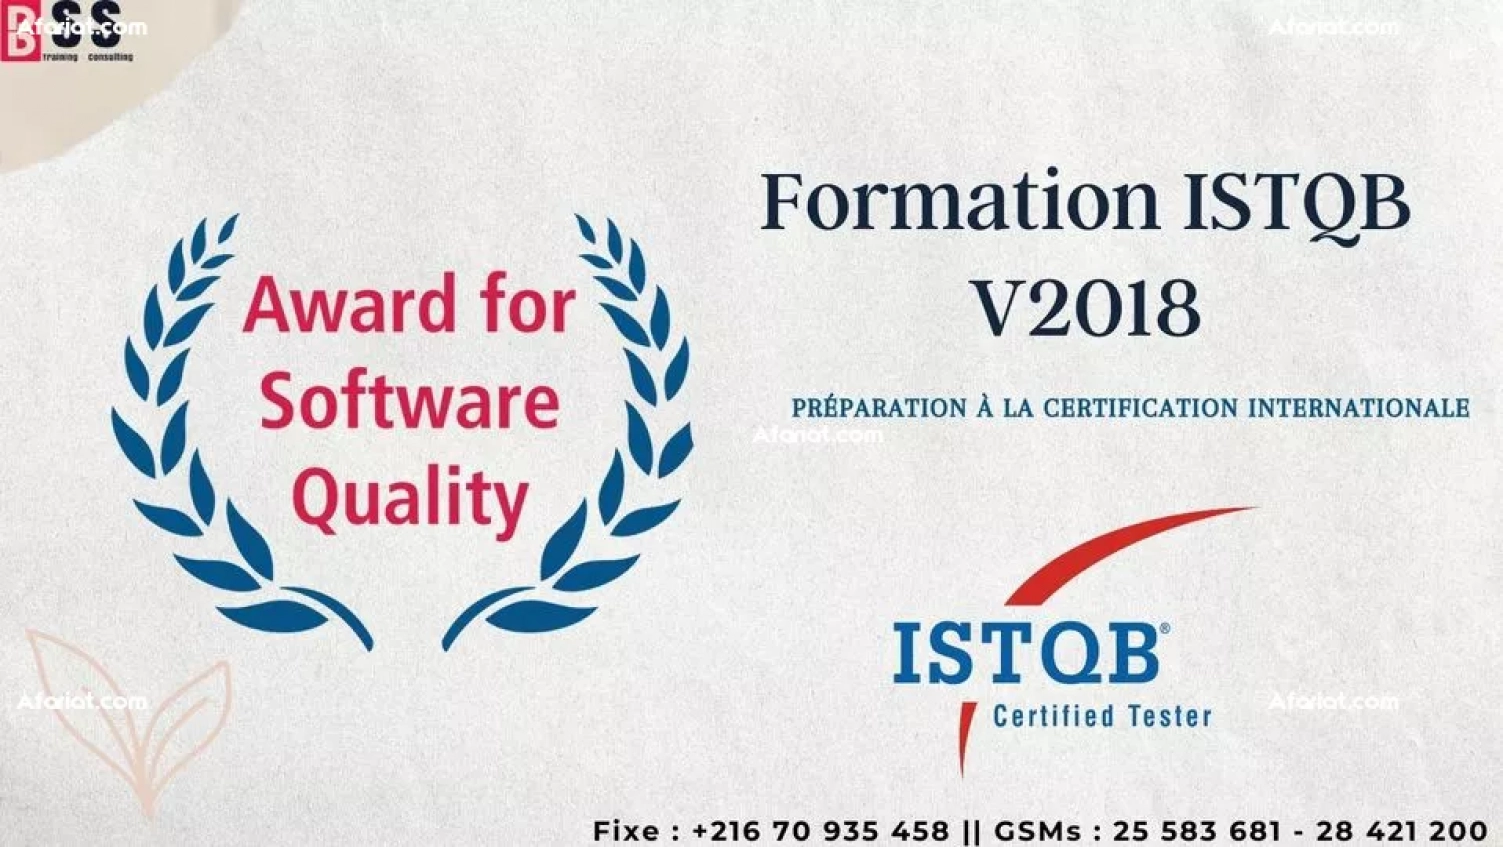 Formation ISTQB Foundation version 2018